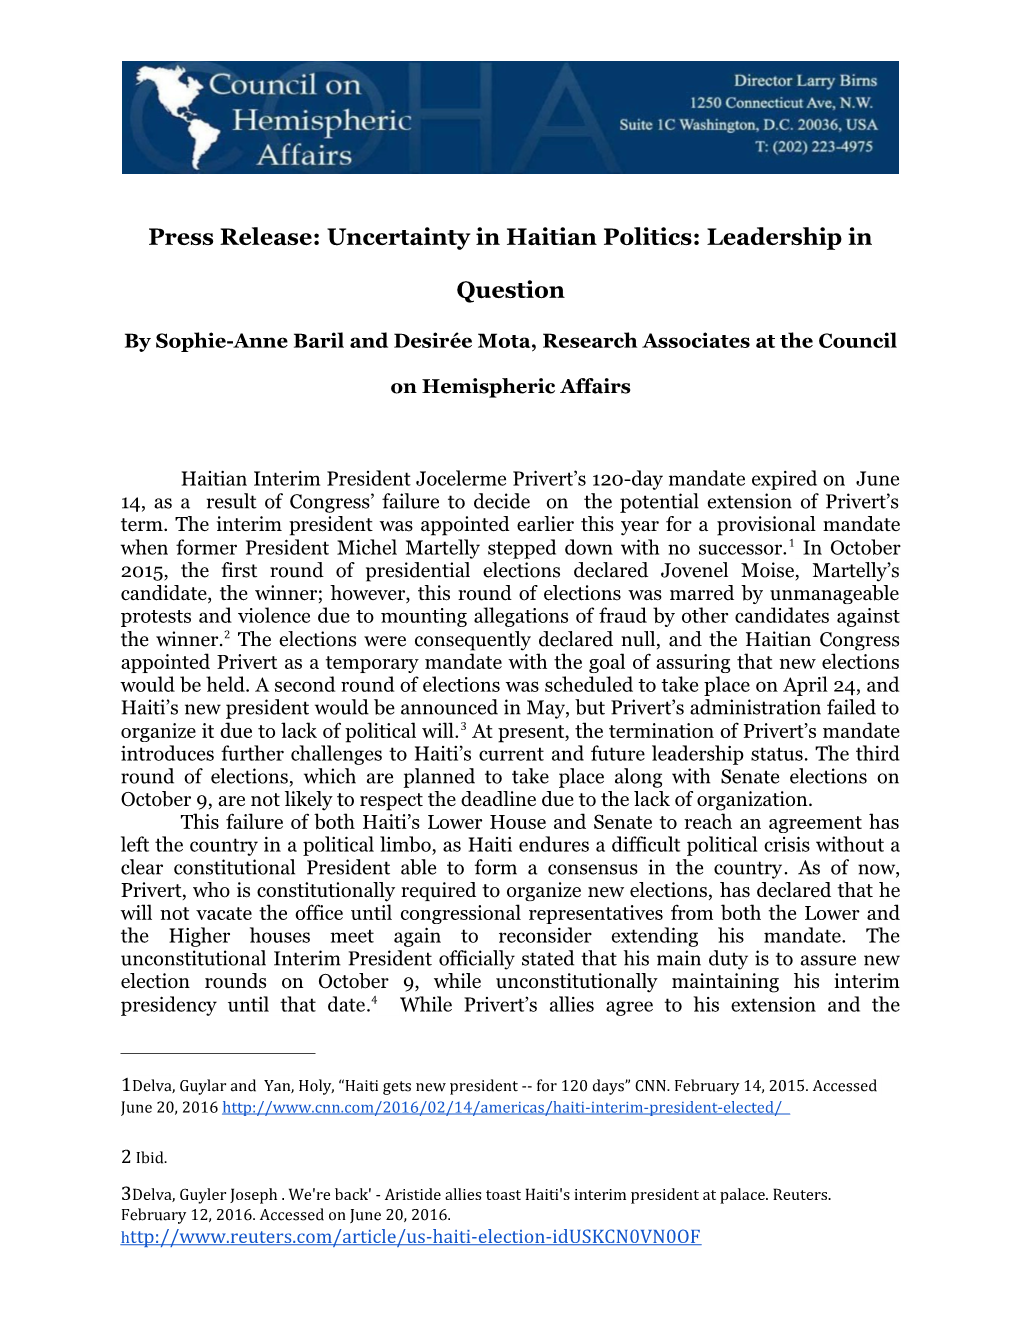 Press Release: Uncertainty in Haitian Politics: Leadership in Question